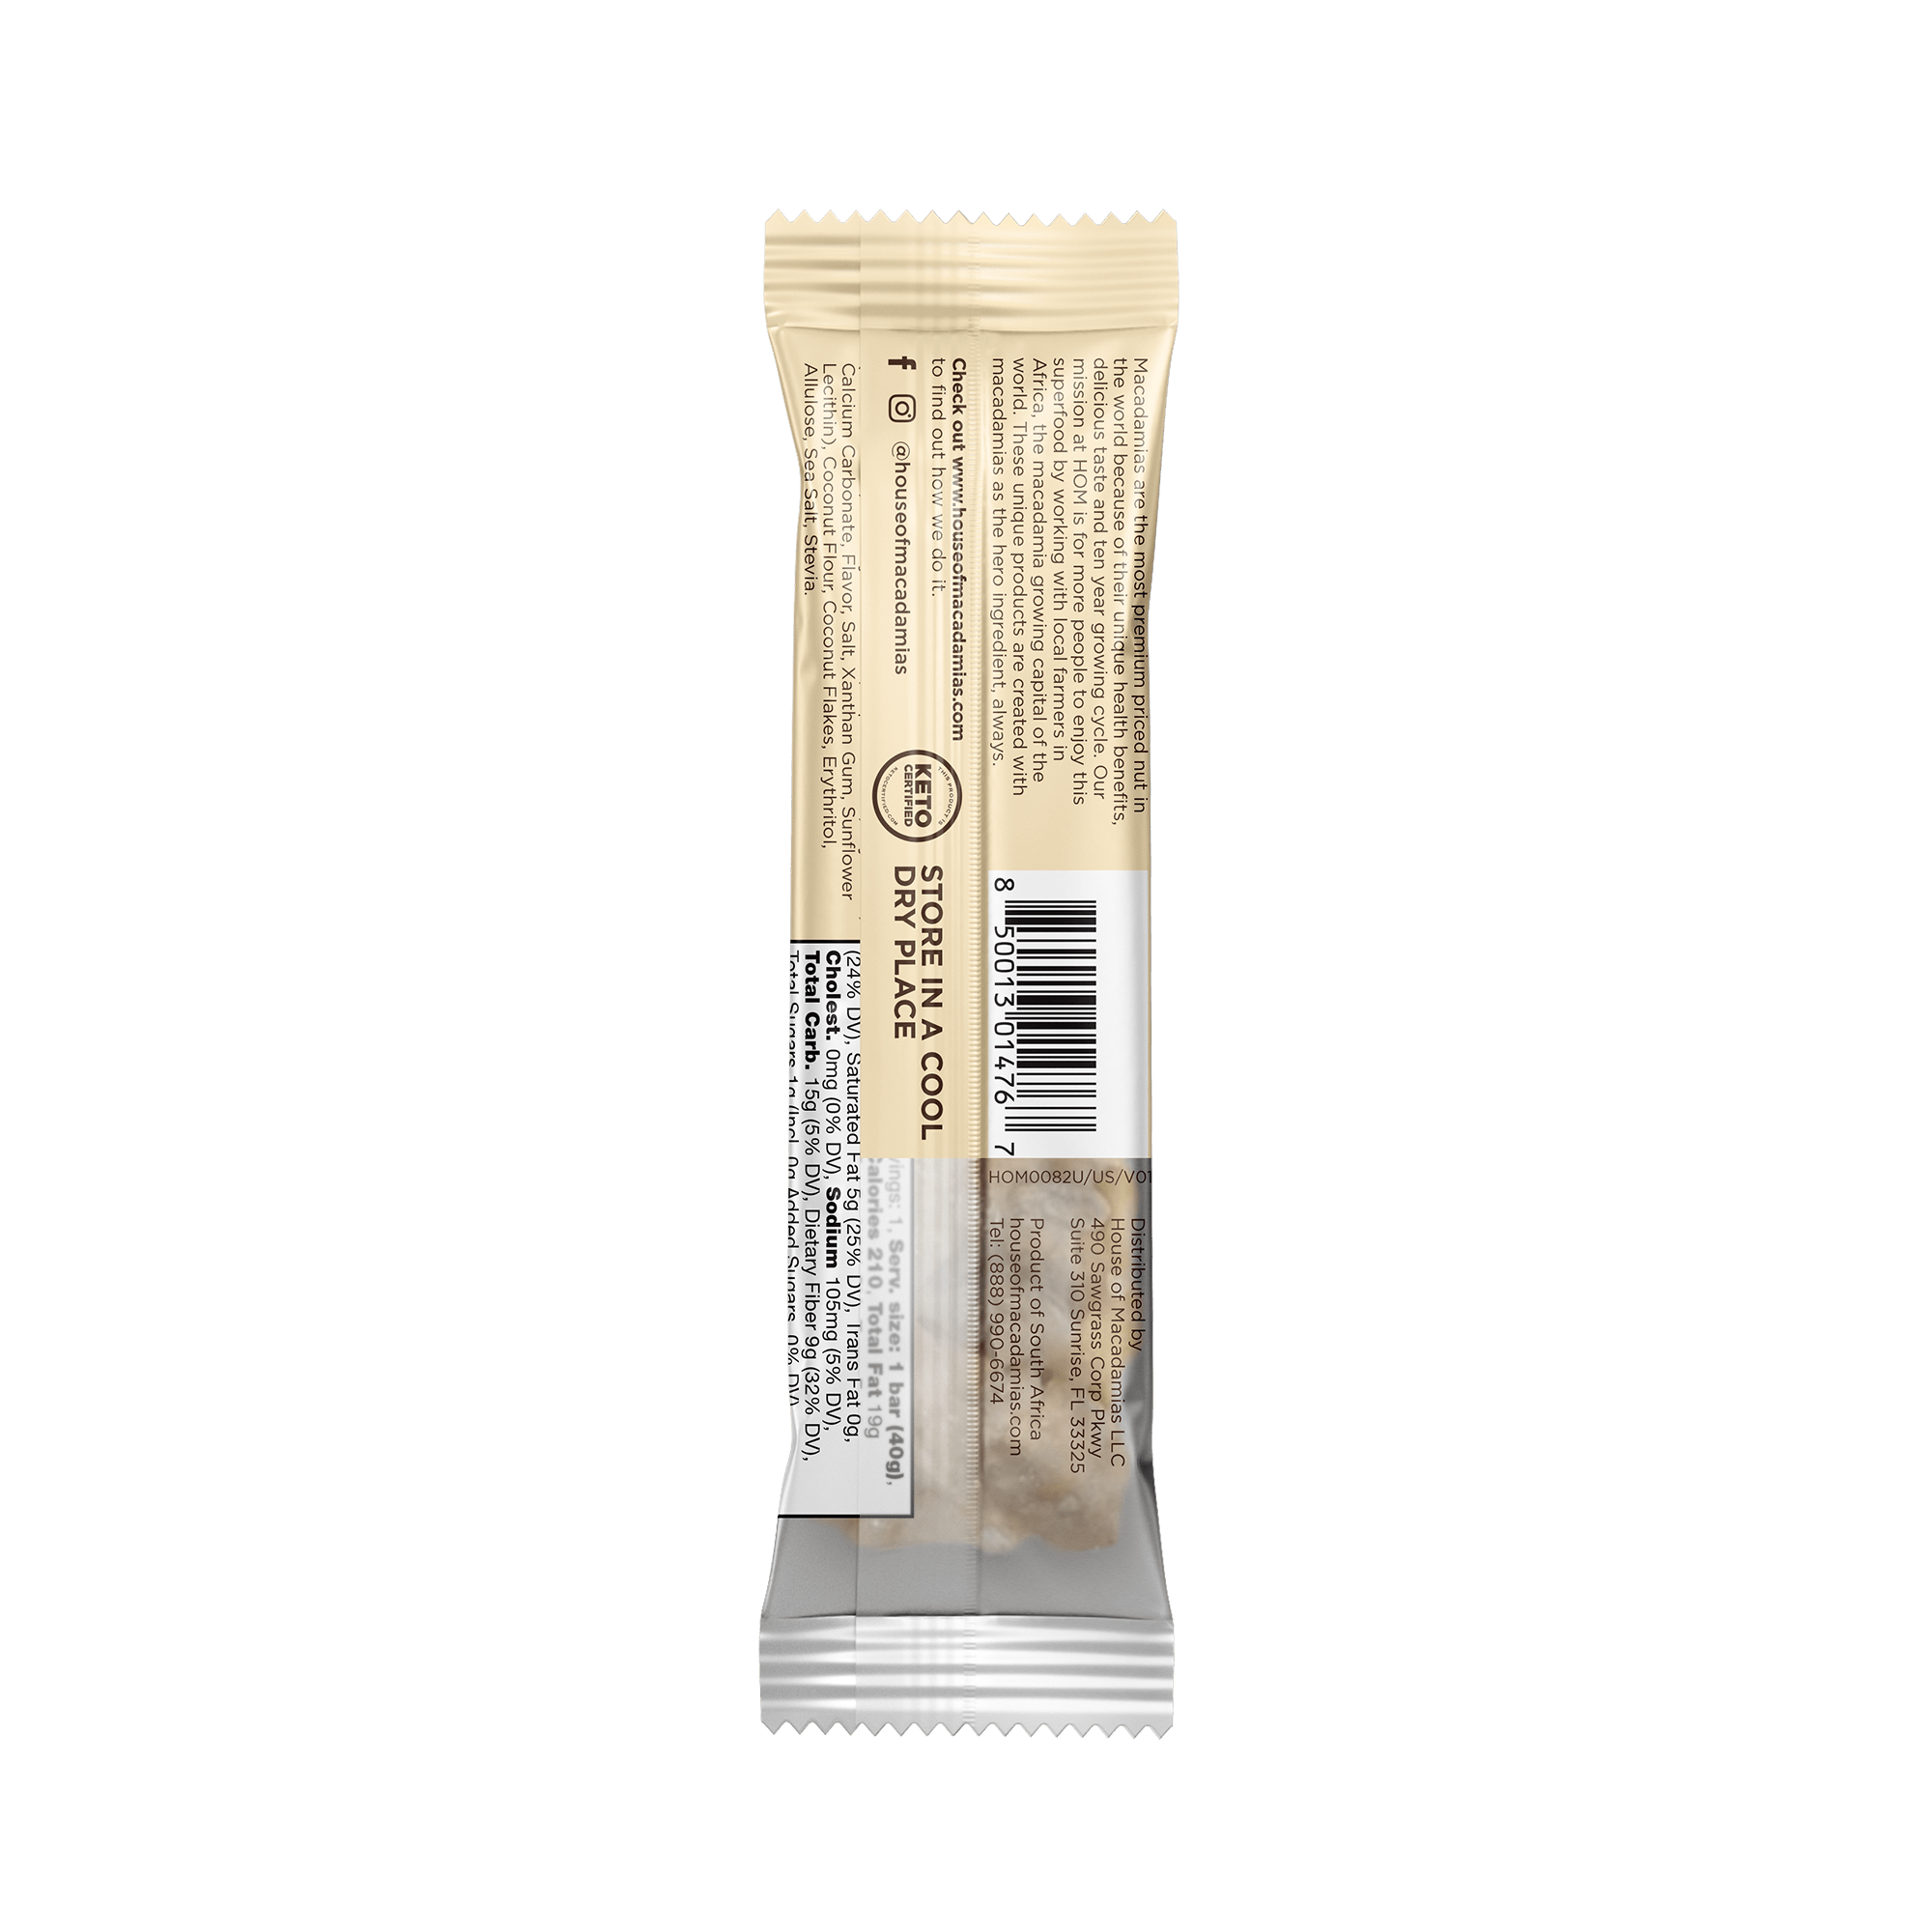 White Chocolate Macadamia Snack Bar (12 Bars) - House of Macadamias - calories in macadamia nut